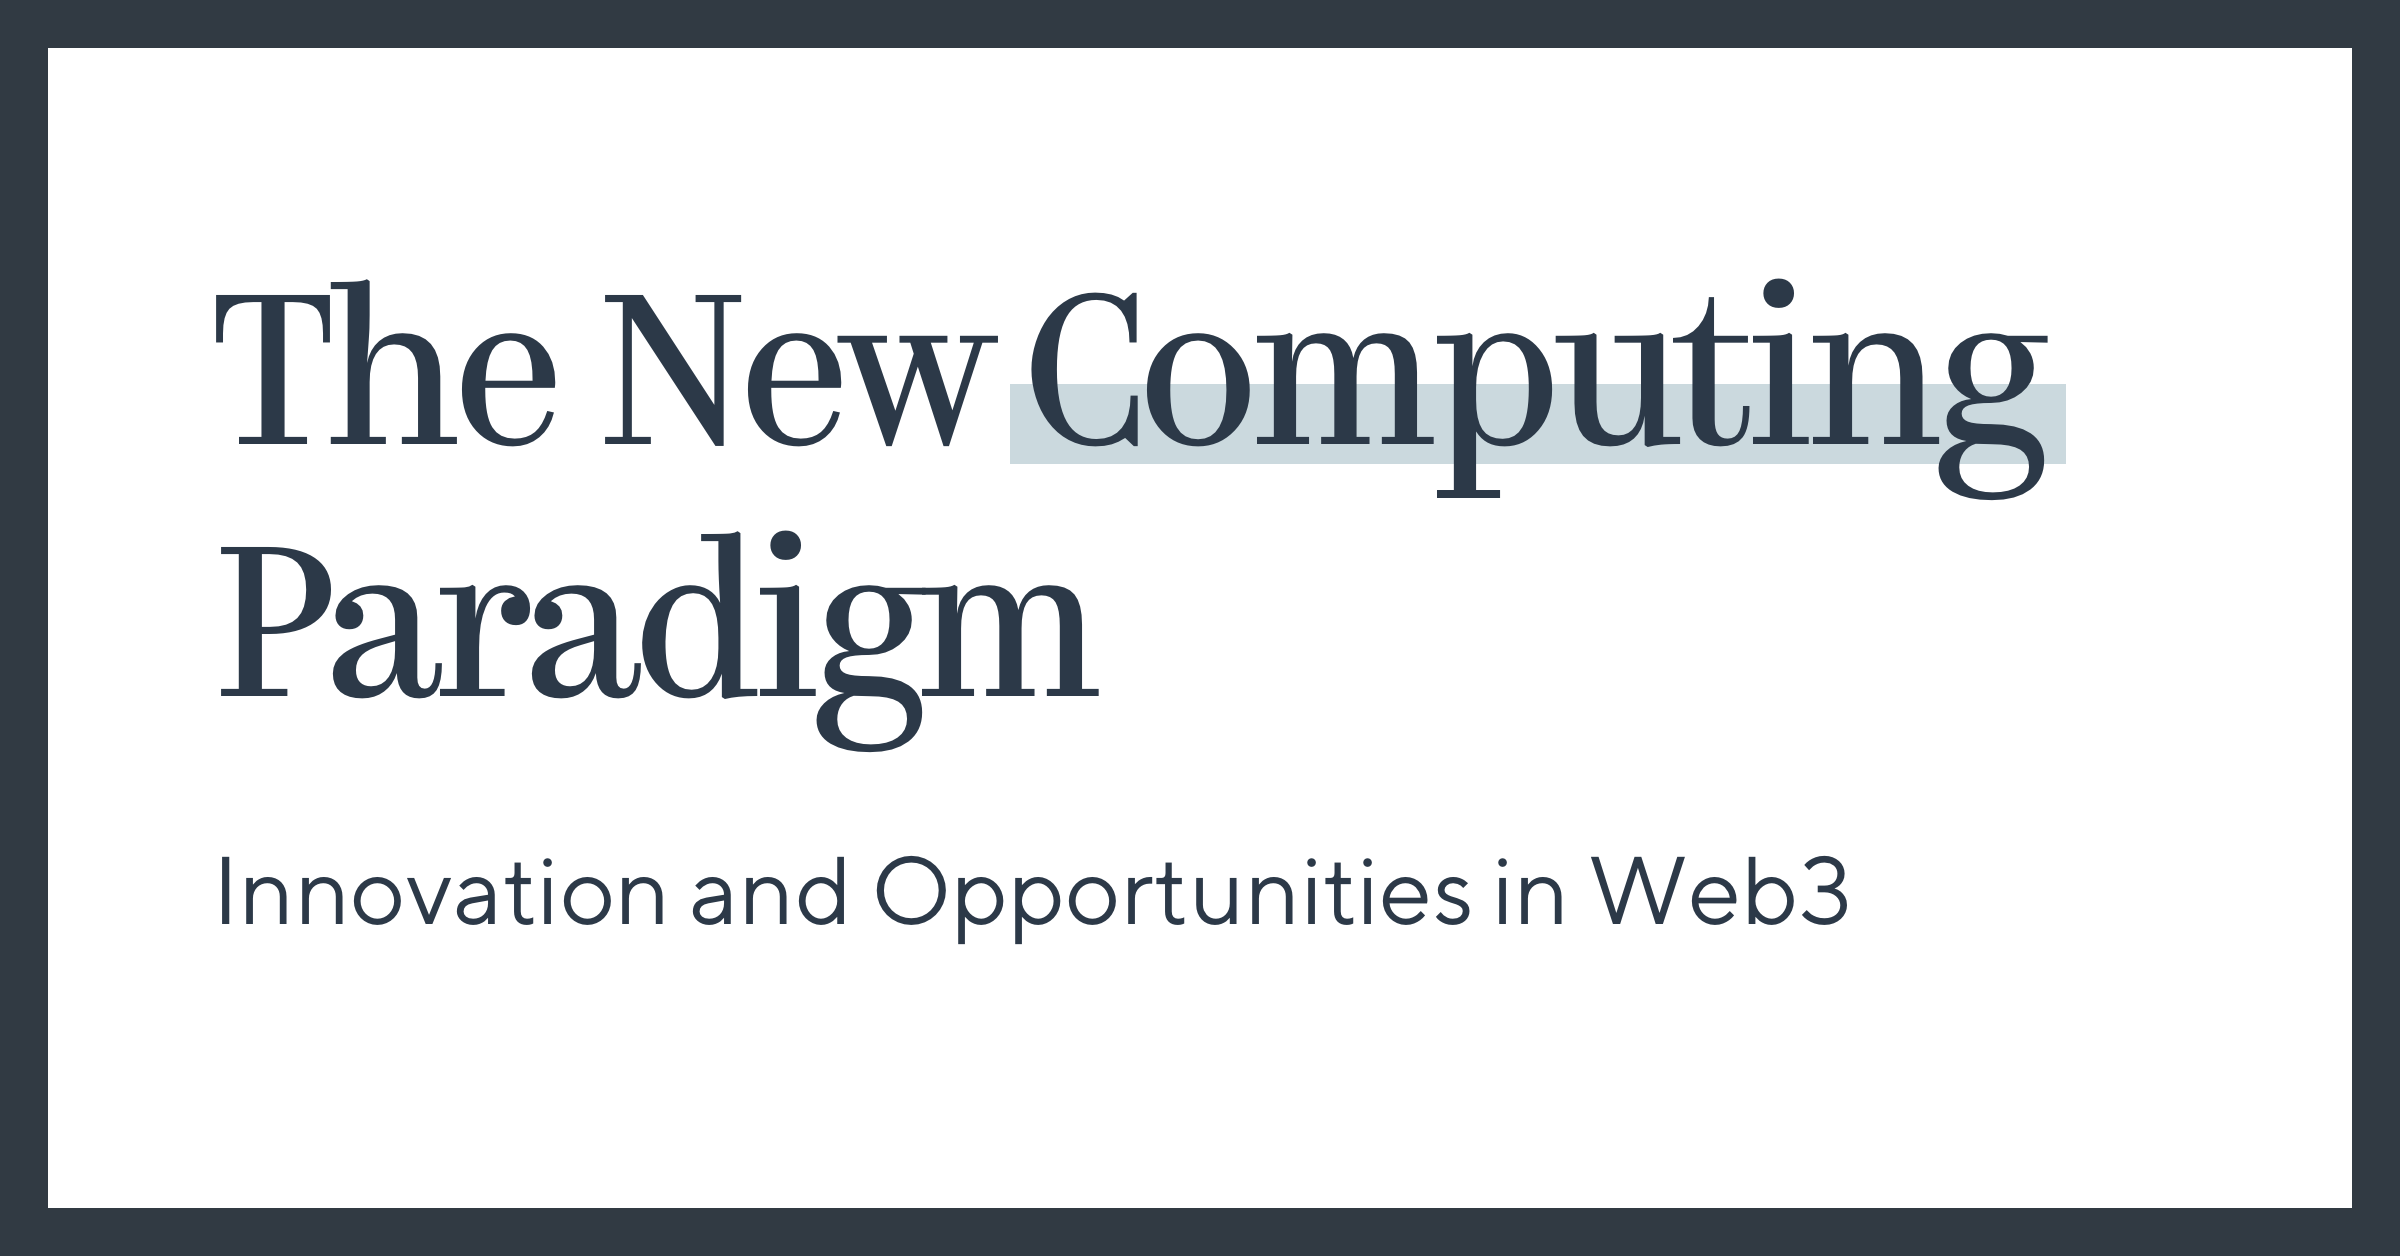 The New Computing Paradigm